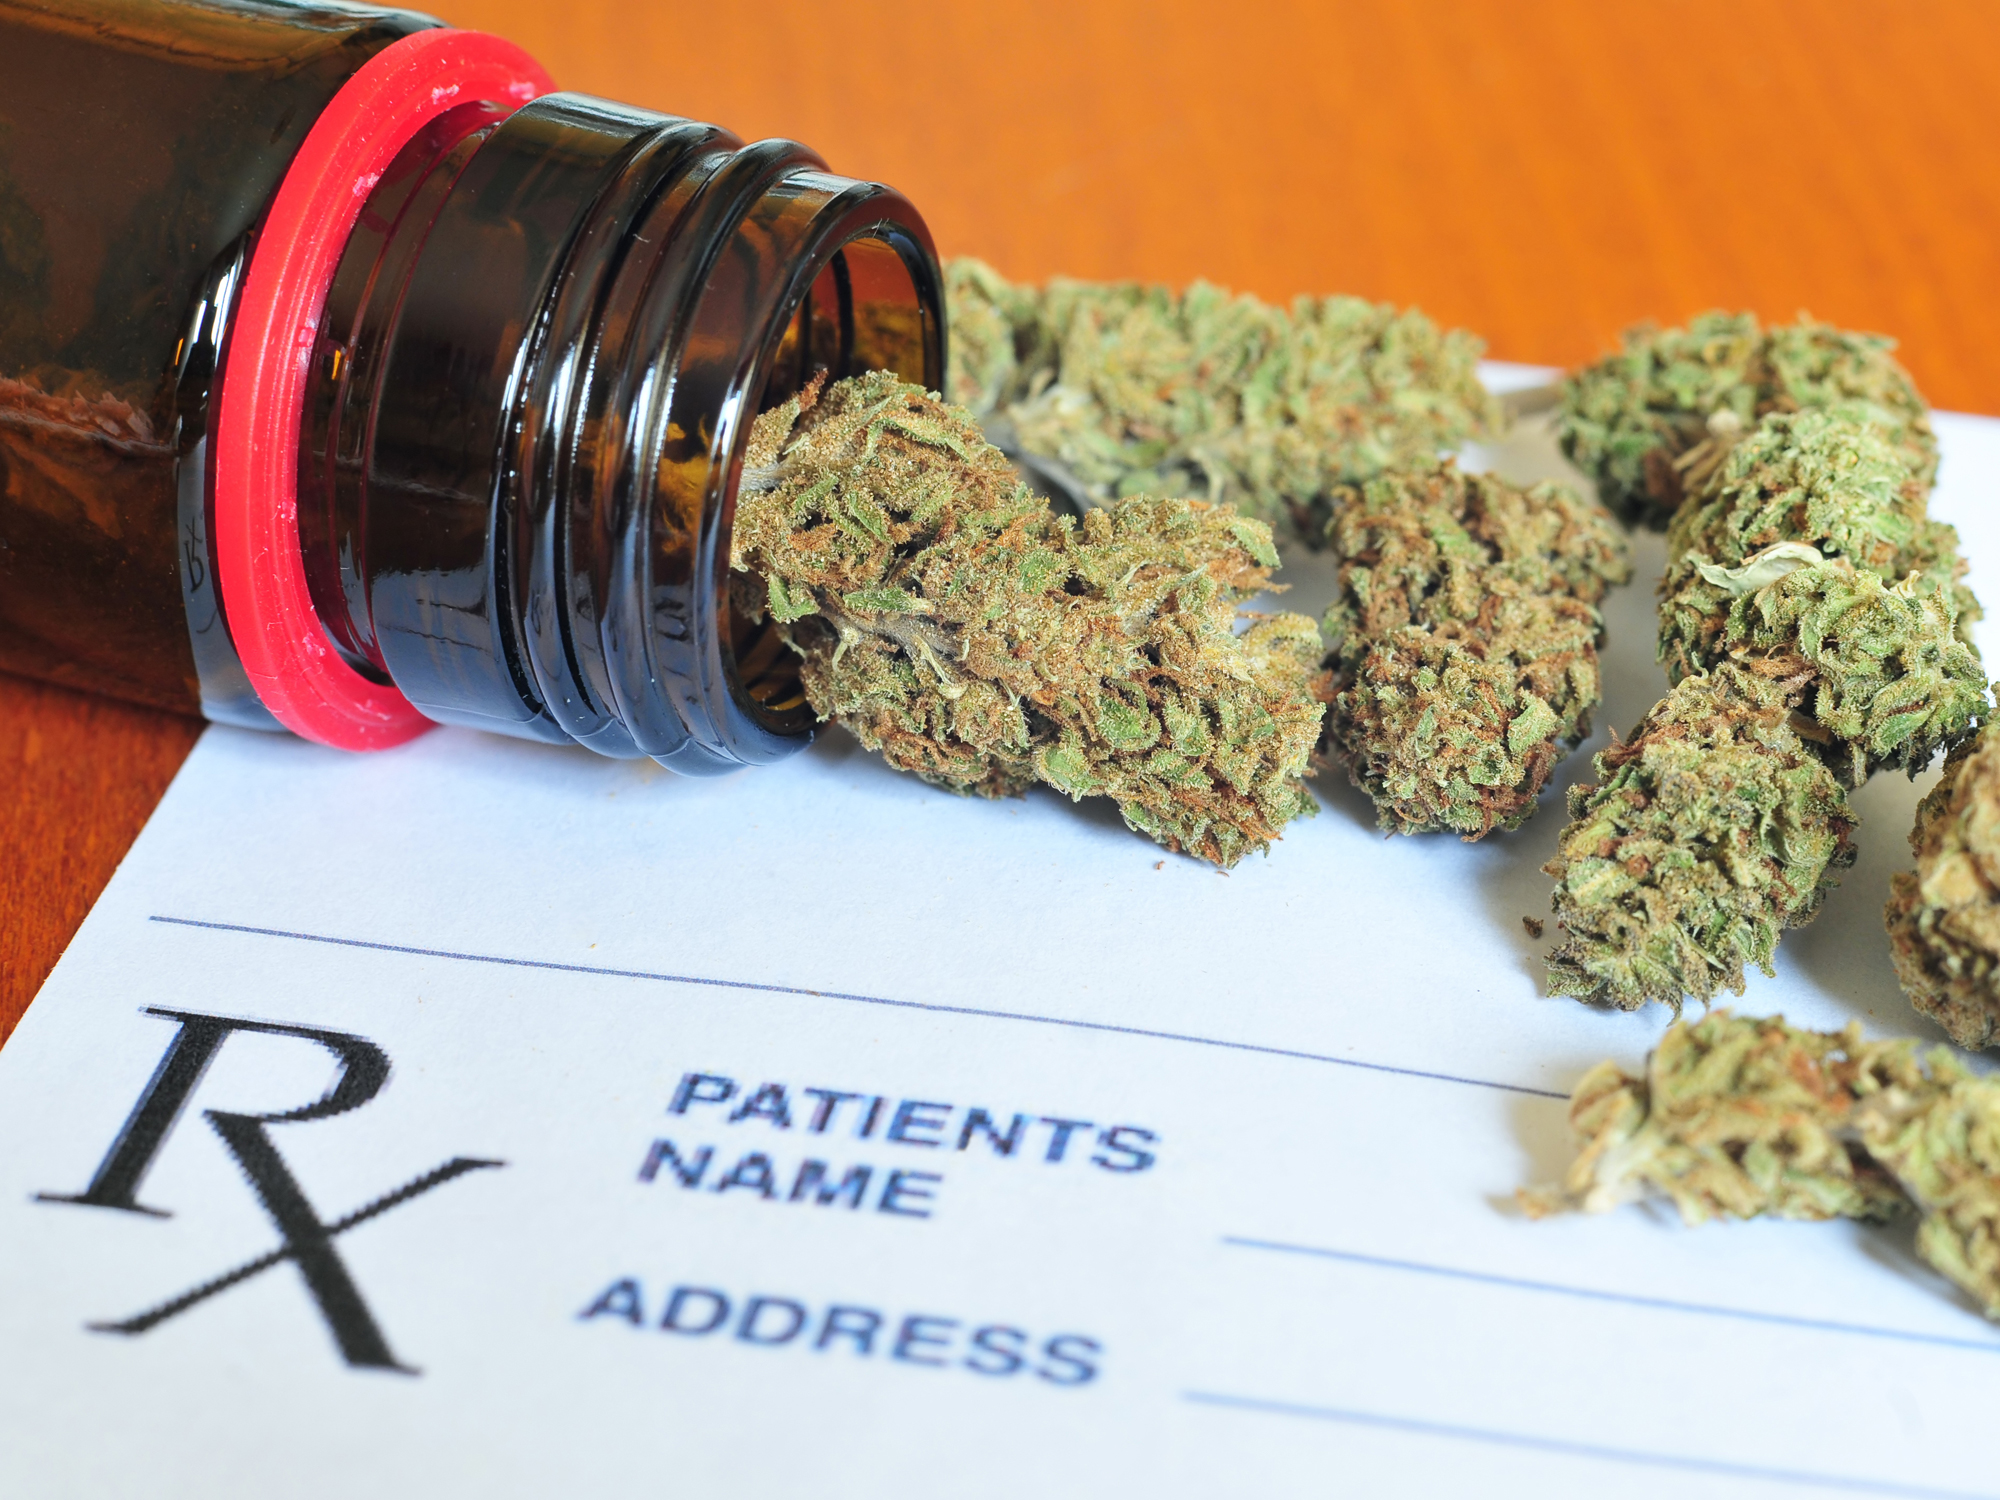 2 modern medicine fails medical marijuana could solve